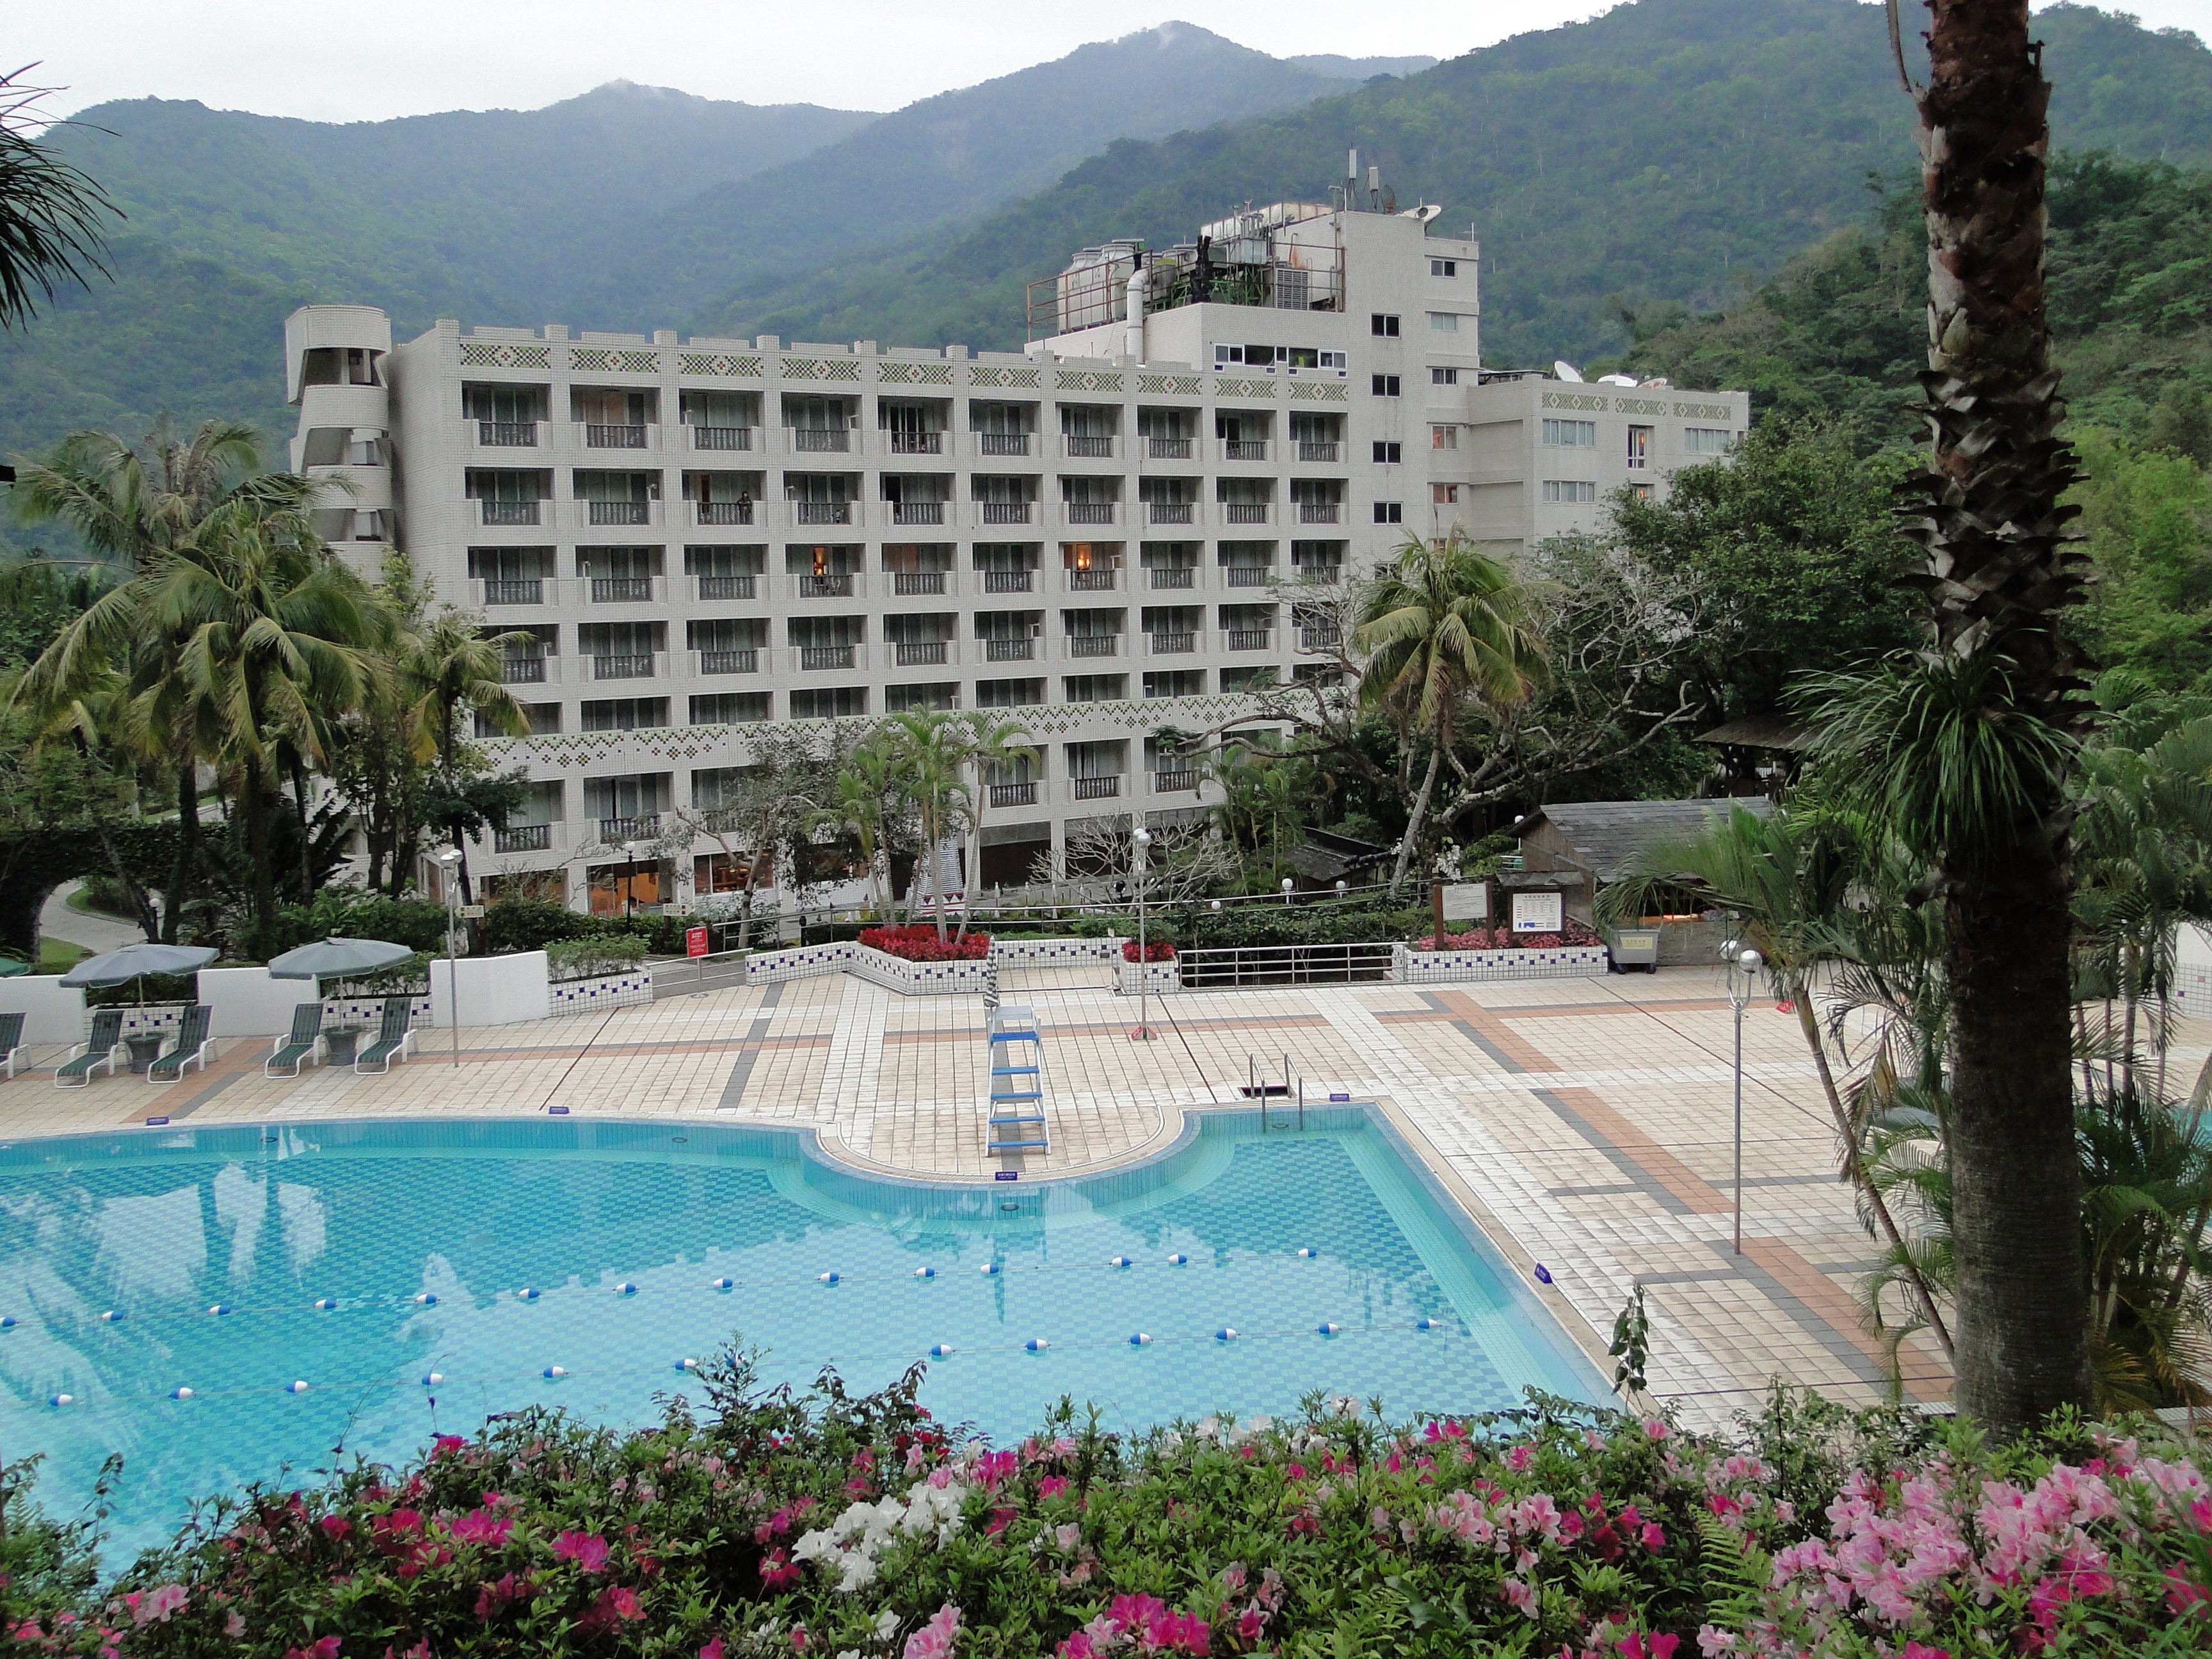 Hotel Royal Chihpen, Taitung County, Taiwan